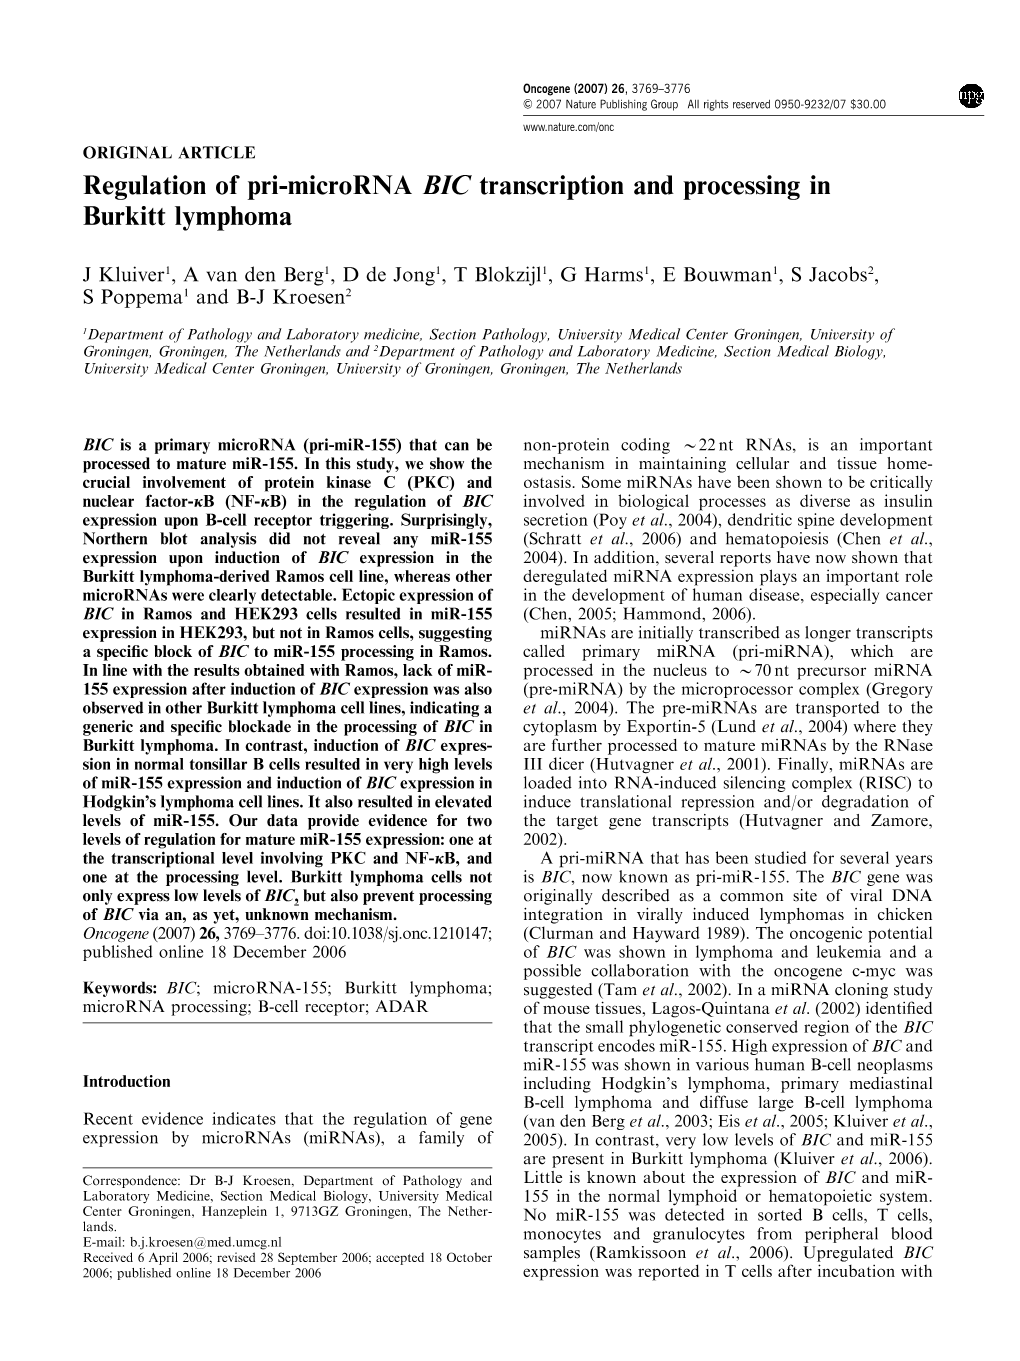 Regulation of Pri-Microrna BIC Transcription and Processing in Burkitt Lymphoma